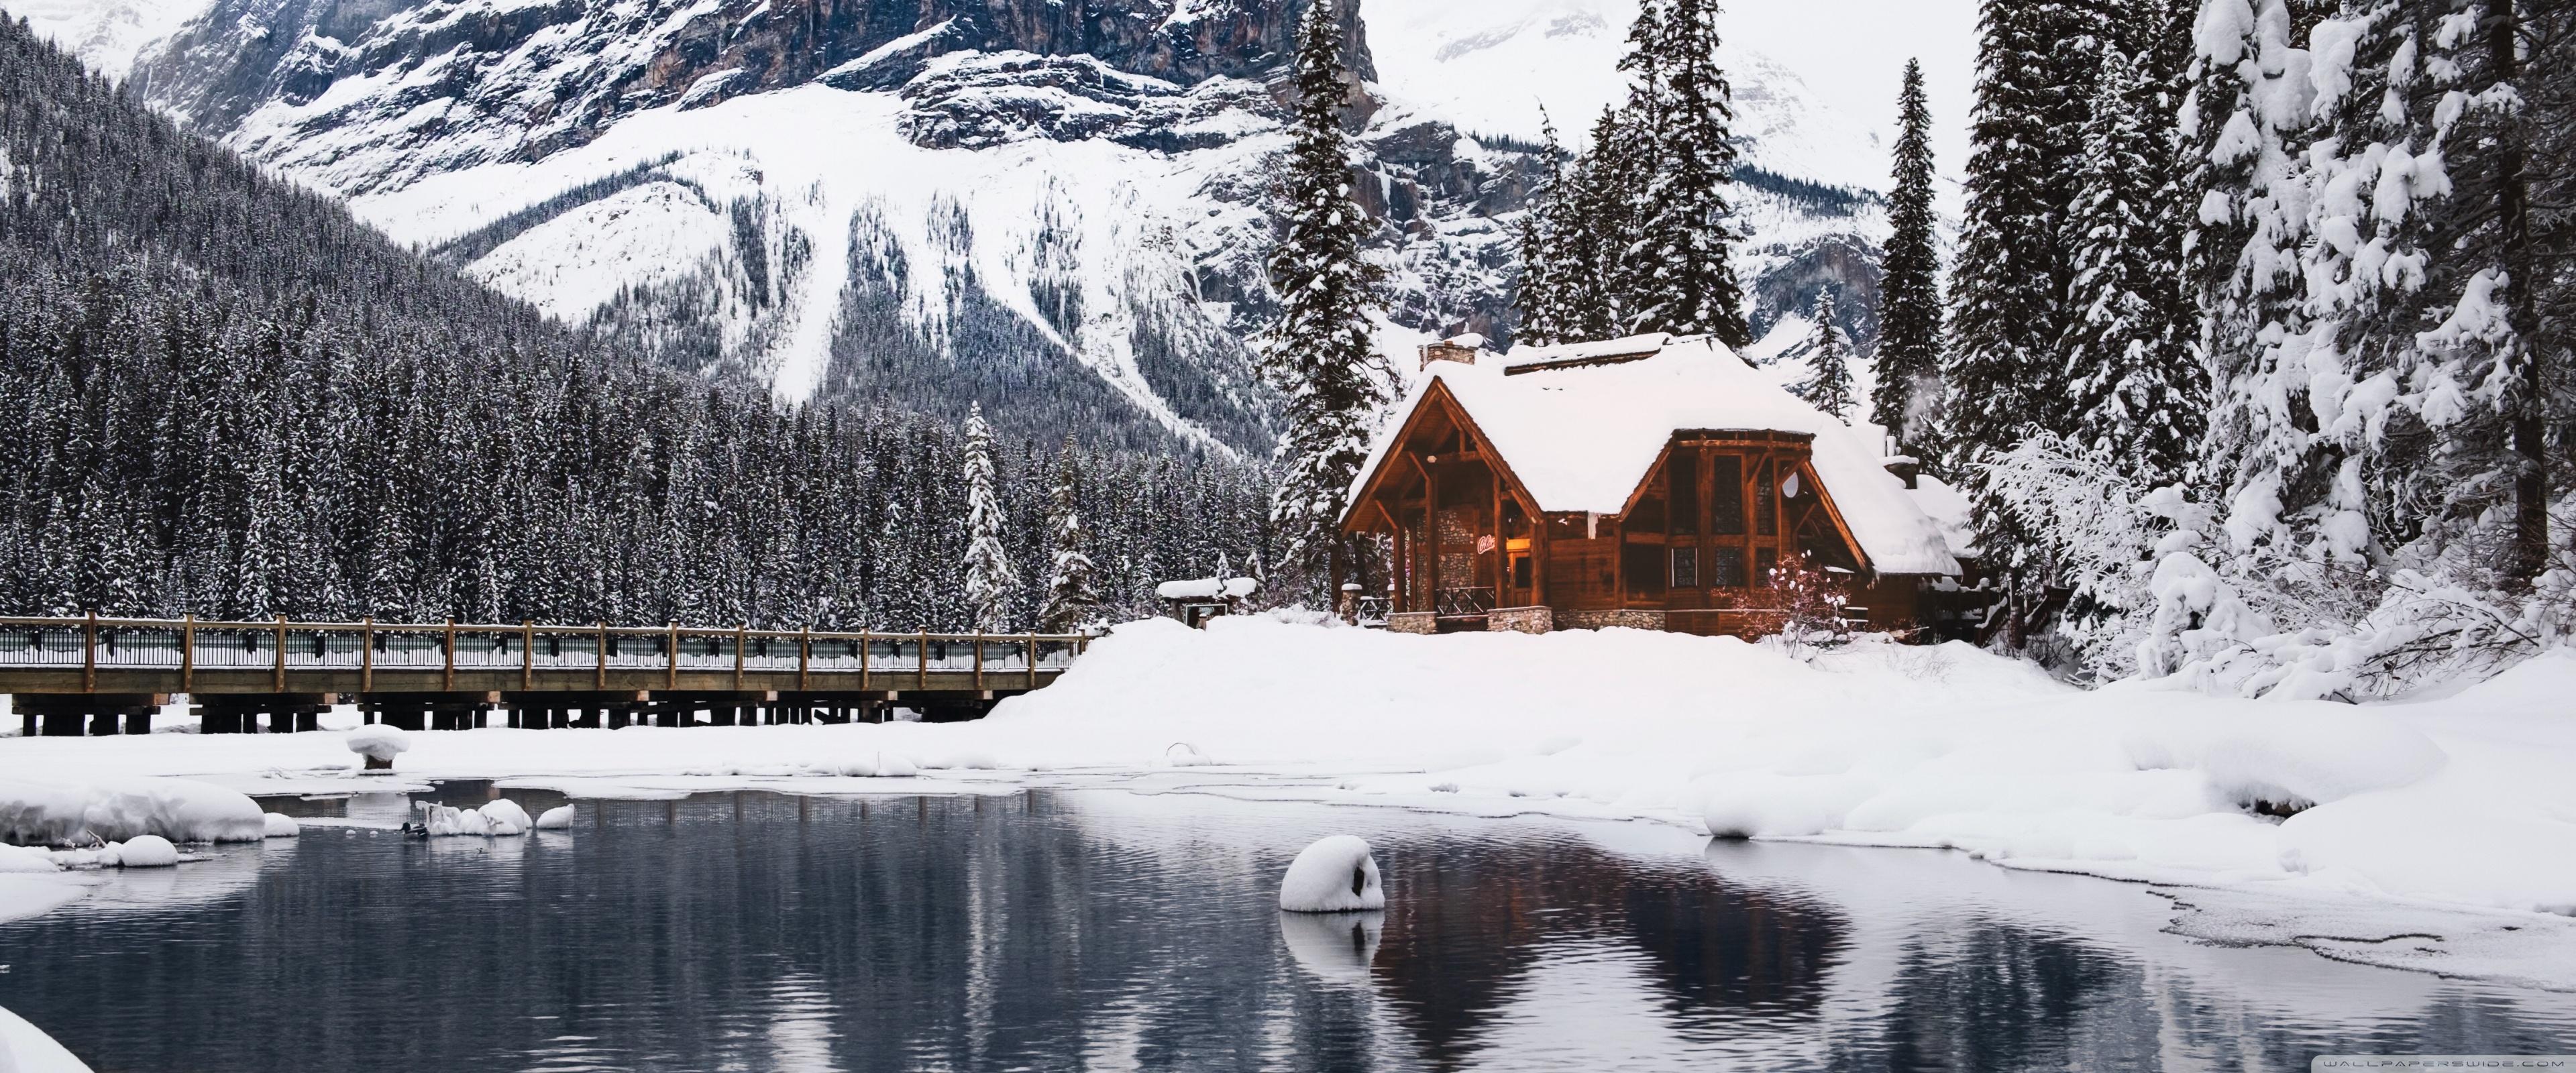 Rustic Cottage, Lake, Mountain, Winter, Snow Ultra HD Desktop Background Wallpaper for 4K UHD TV, Widescreen & UltraWide Desktop & Laptop, Tablet